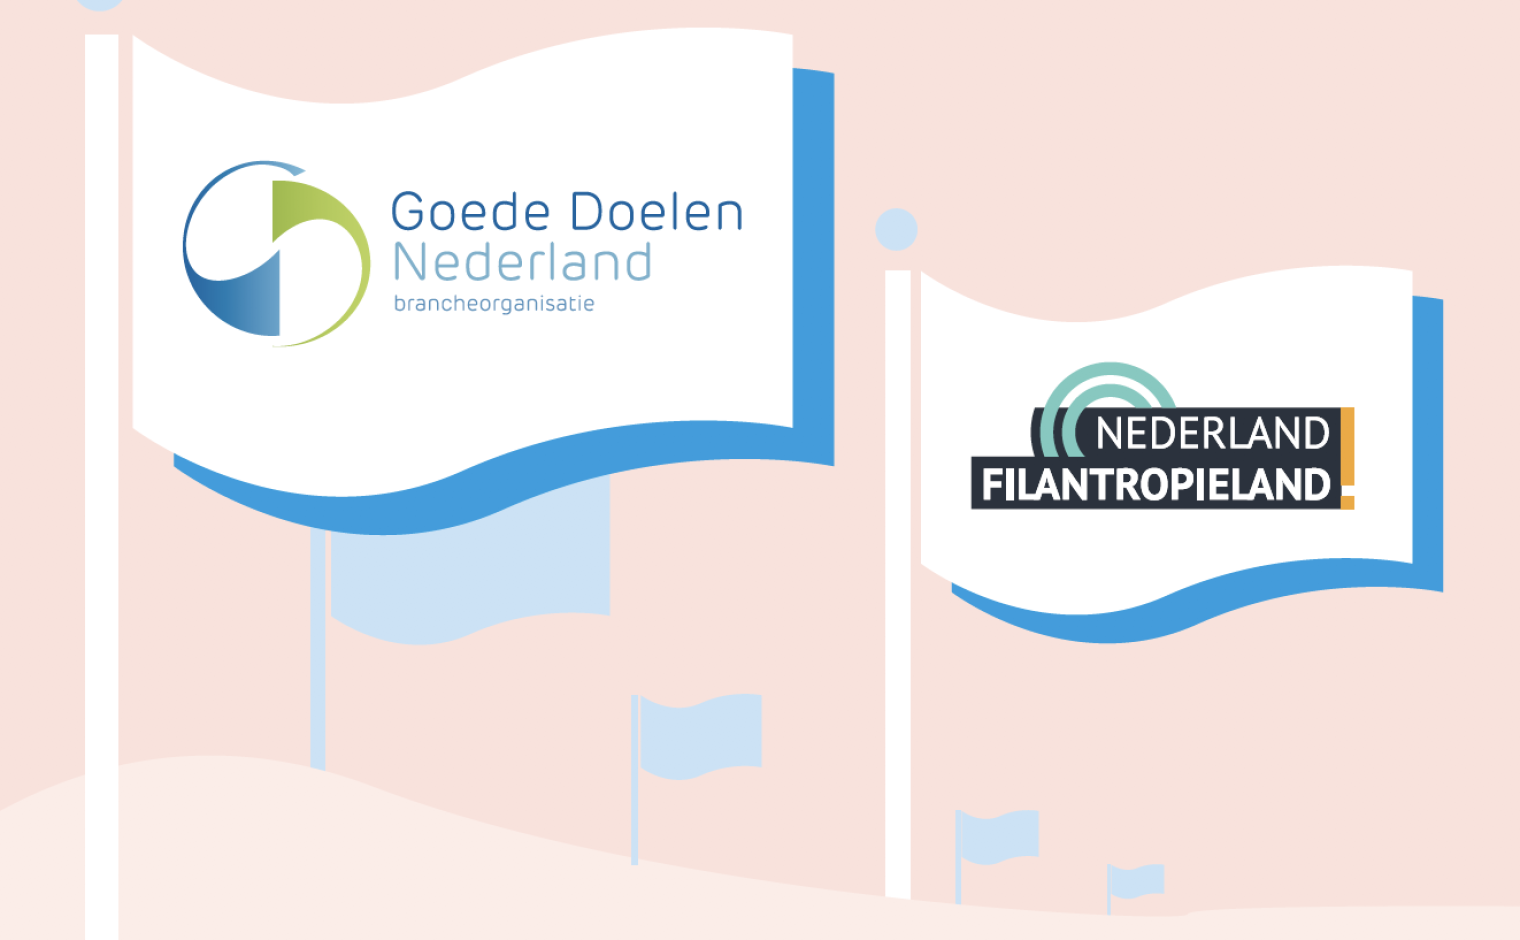 Nederland Filantropieland gaat verder onder de vlag van Goede Doelen Nederland